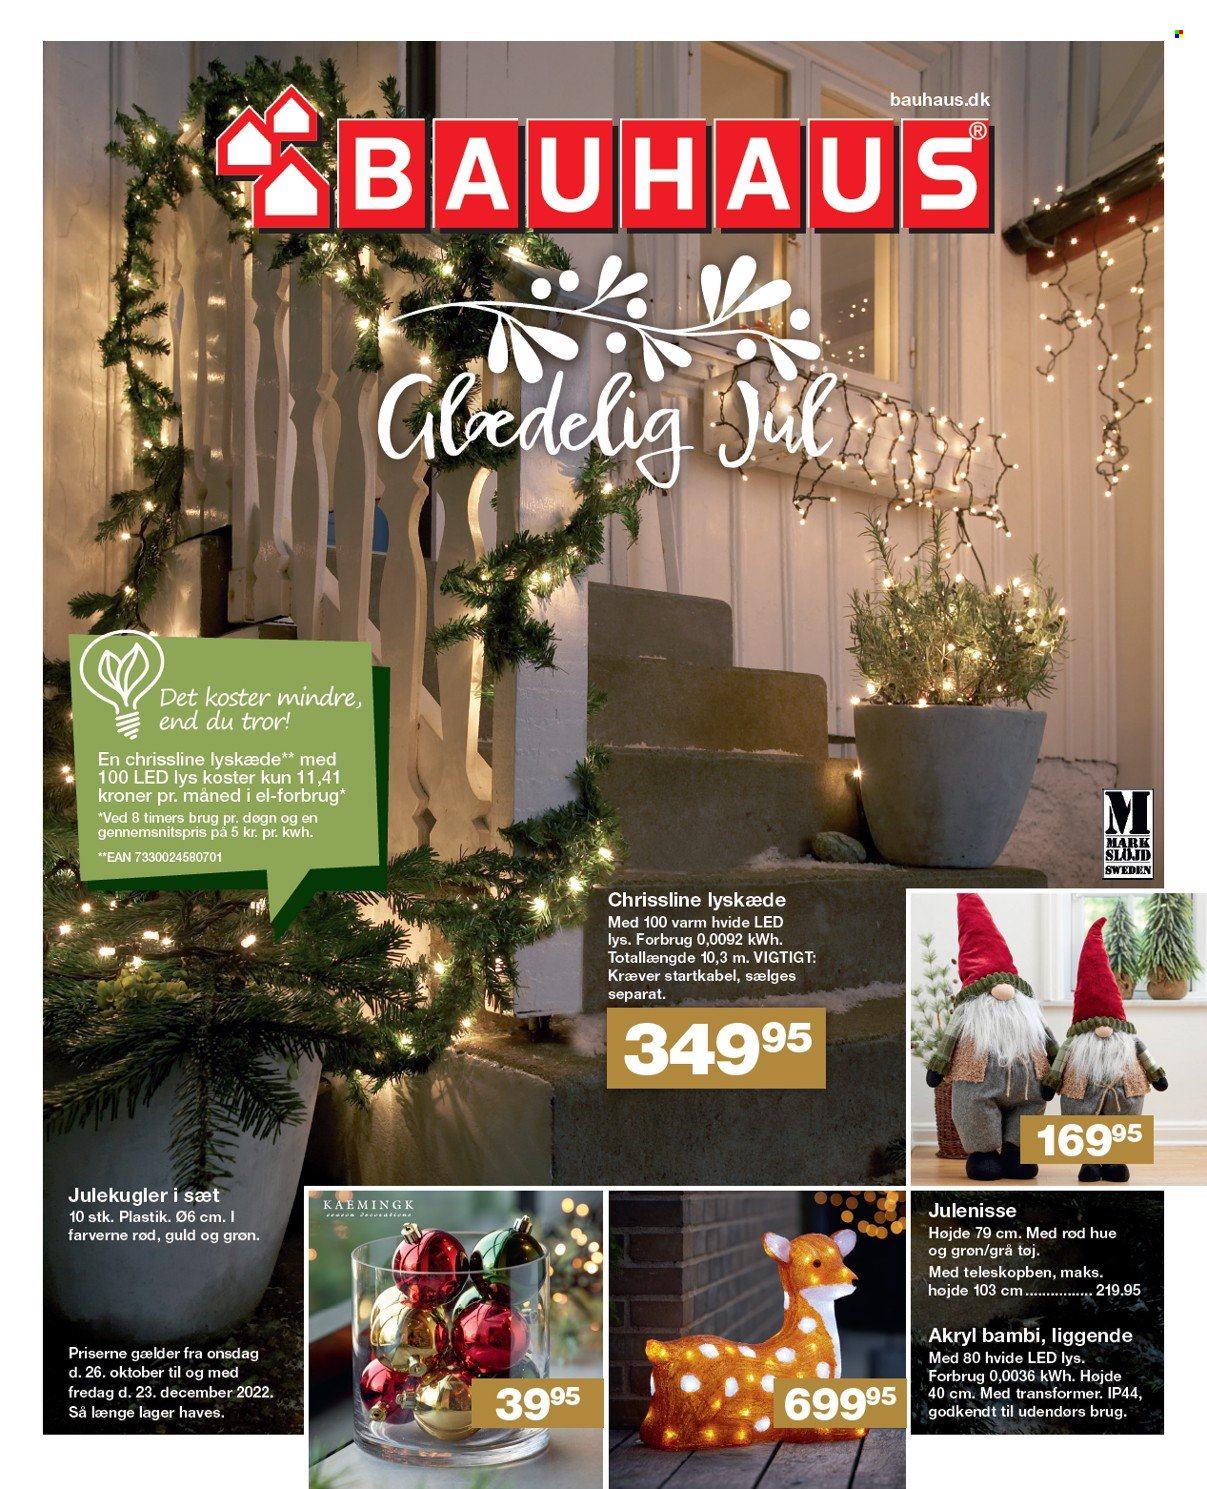 Bauhaus tilbud  - 26.10.2022 - 23.12.2022 - tilbudsprodukter - lyskæde, led lys. Side 1.